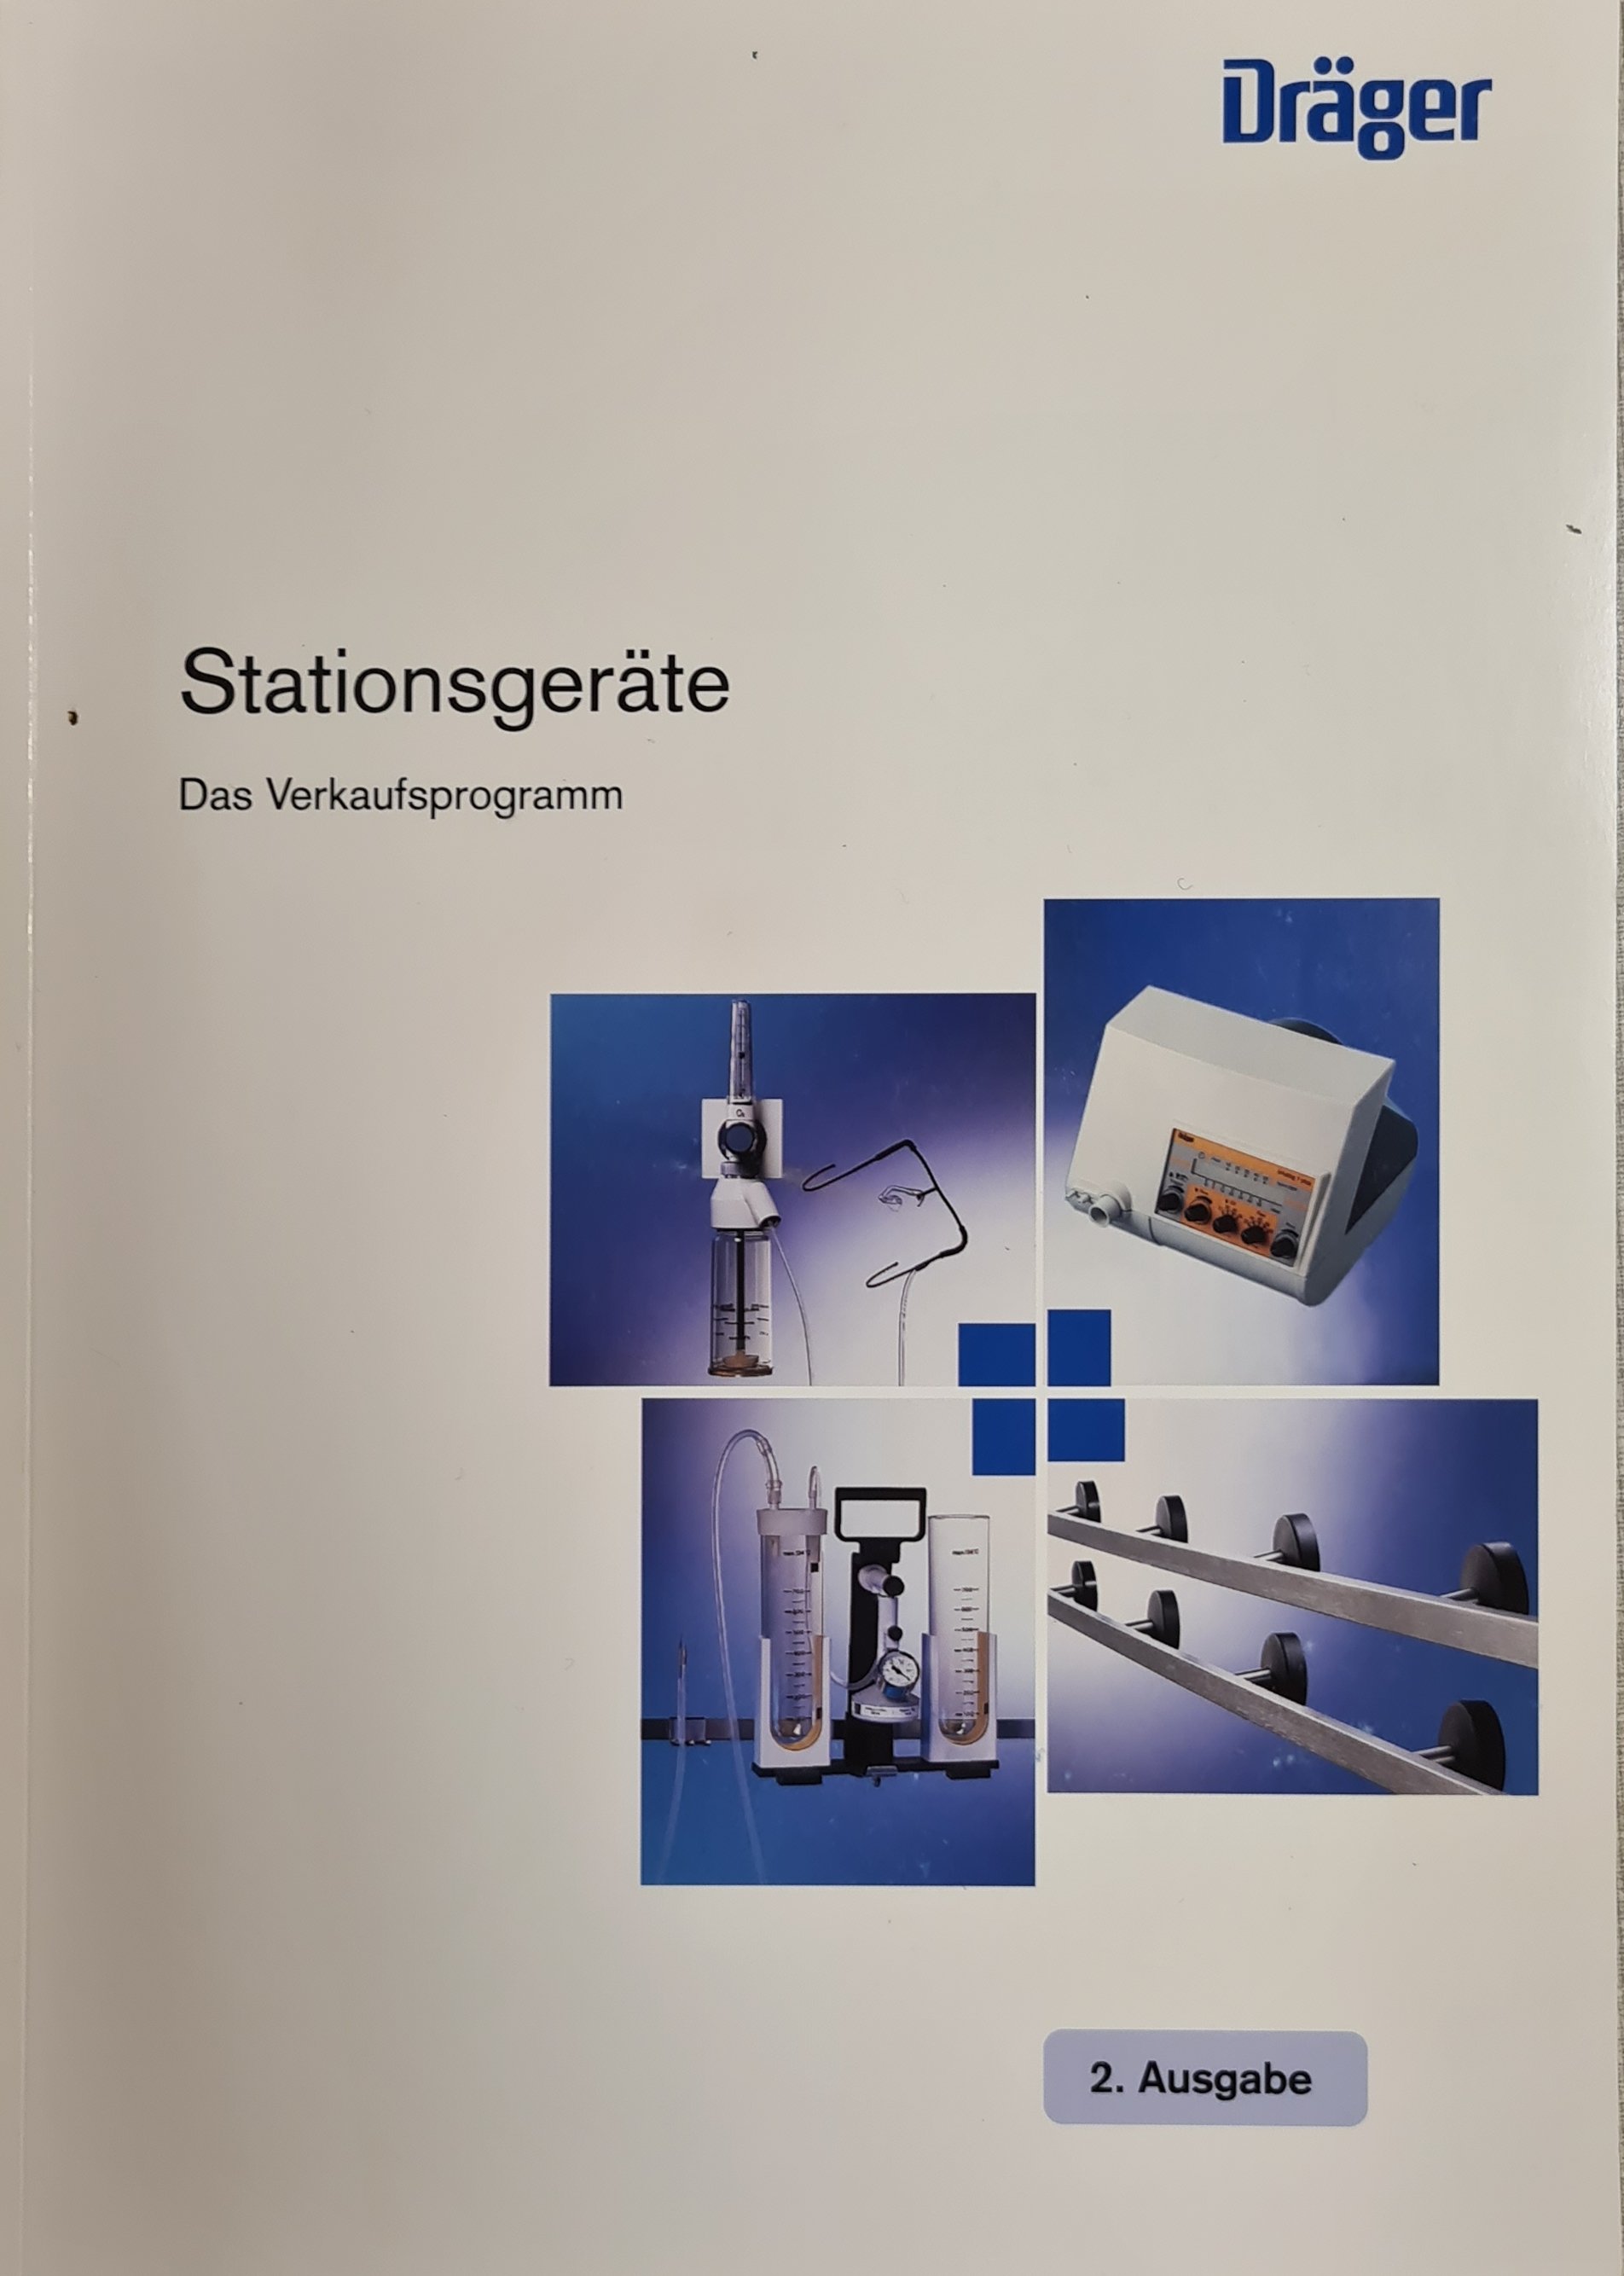 Stationsgeräte (Krankenhausmuseum Bielefeld e.V. CC BY-NC-SA)